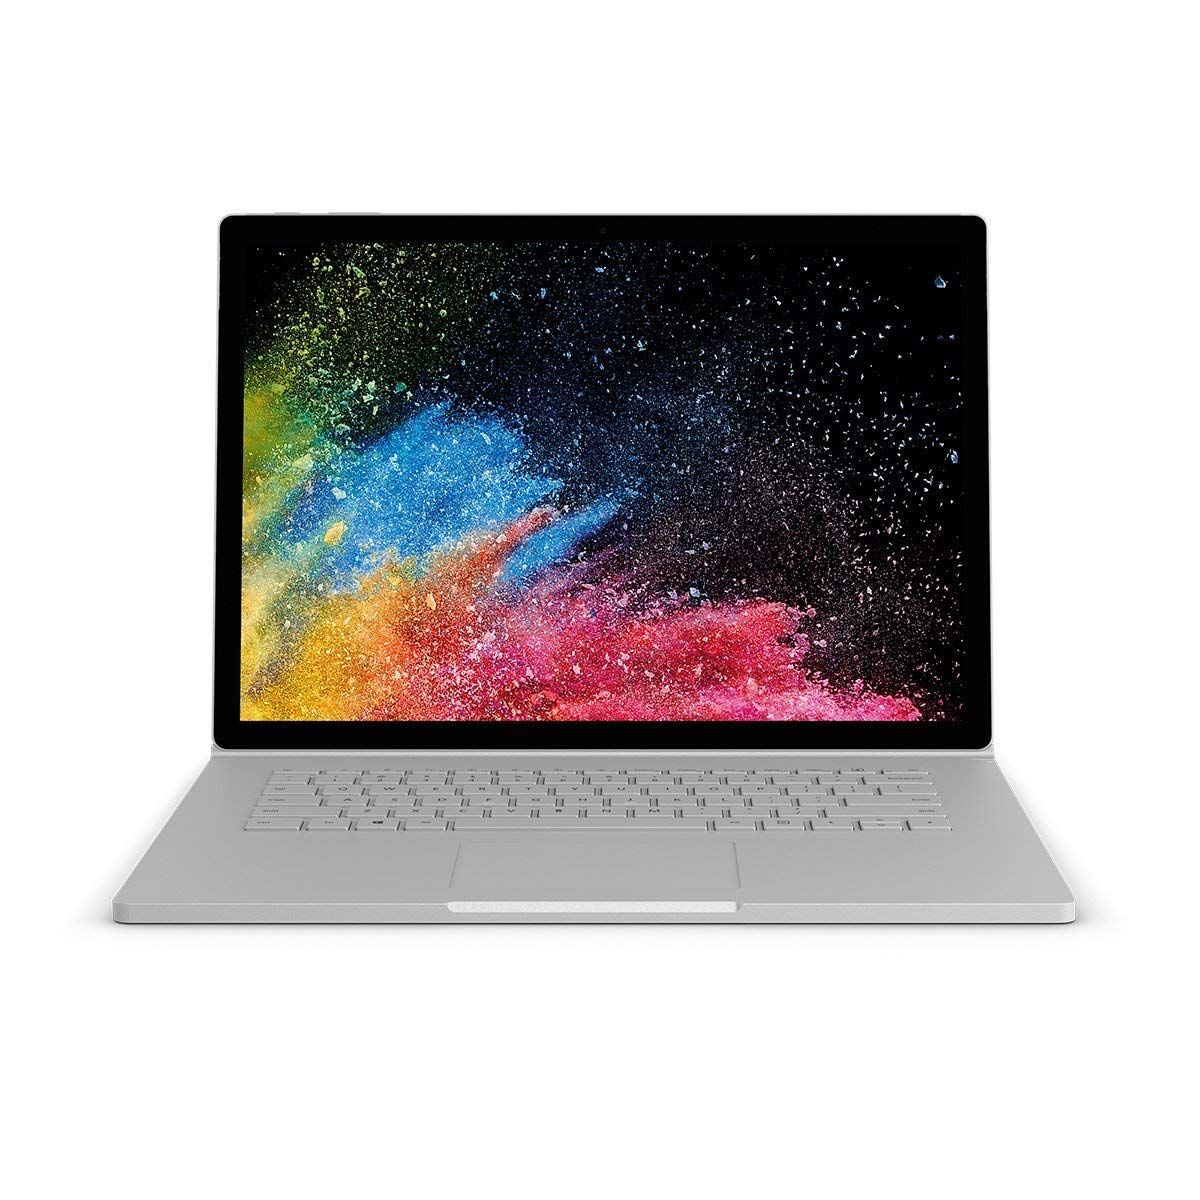 2017 mac laptop for graphic design